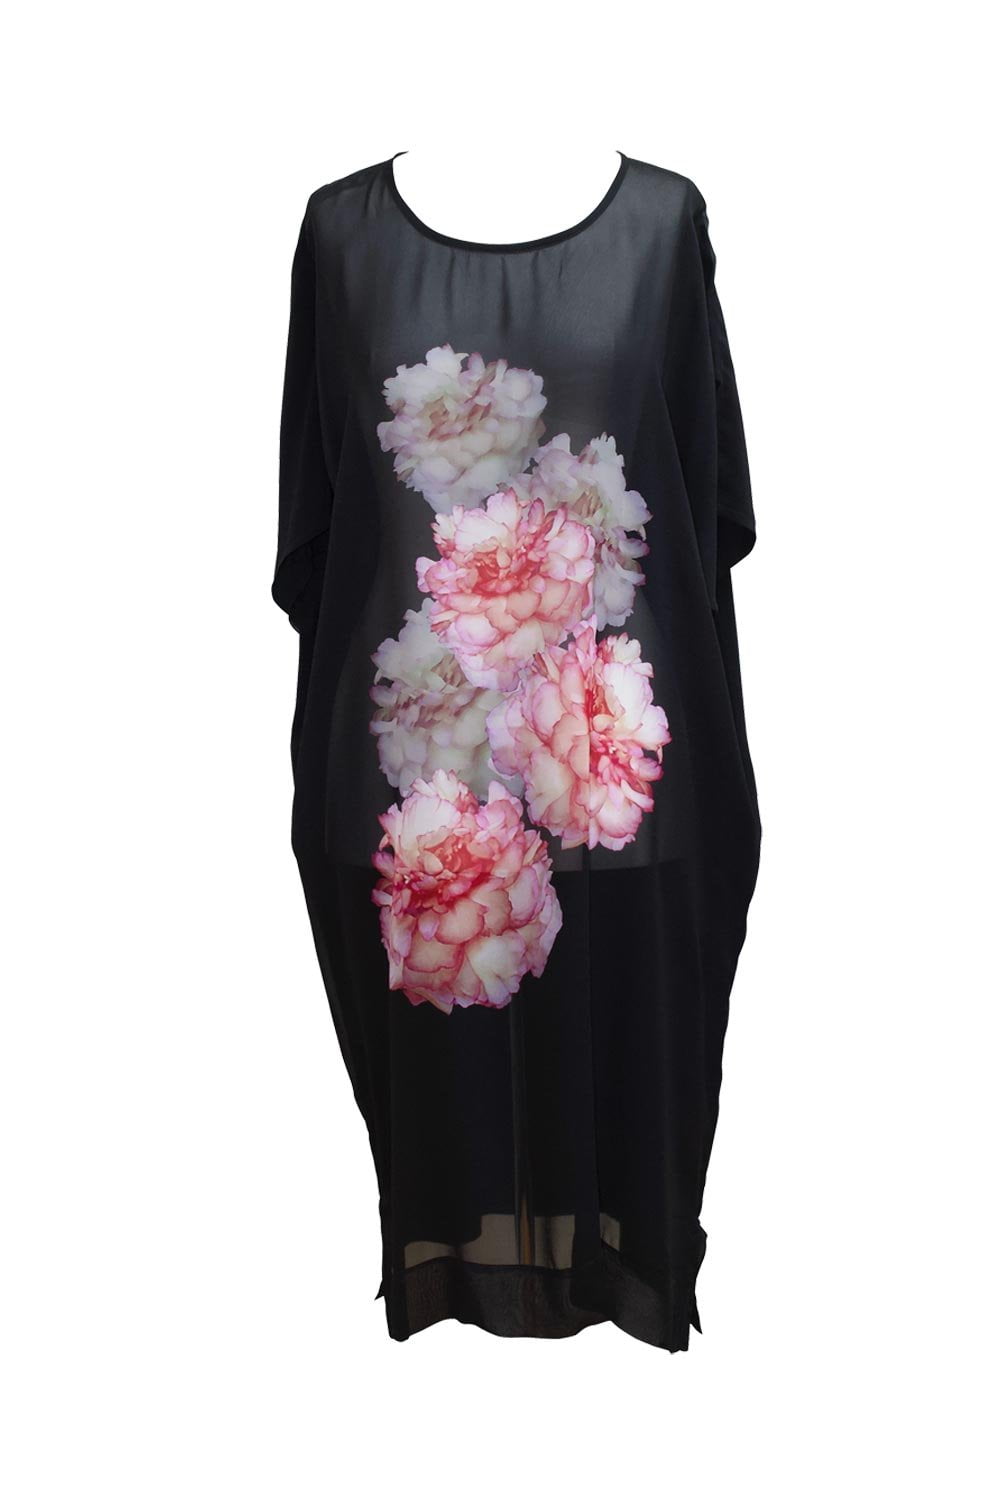 Bittermoon-Artist Dress in Black - Classique Boutique